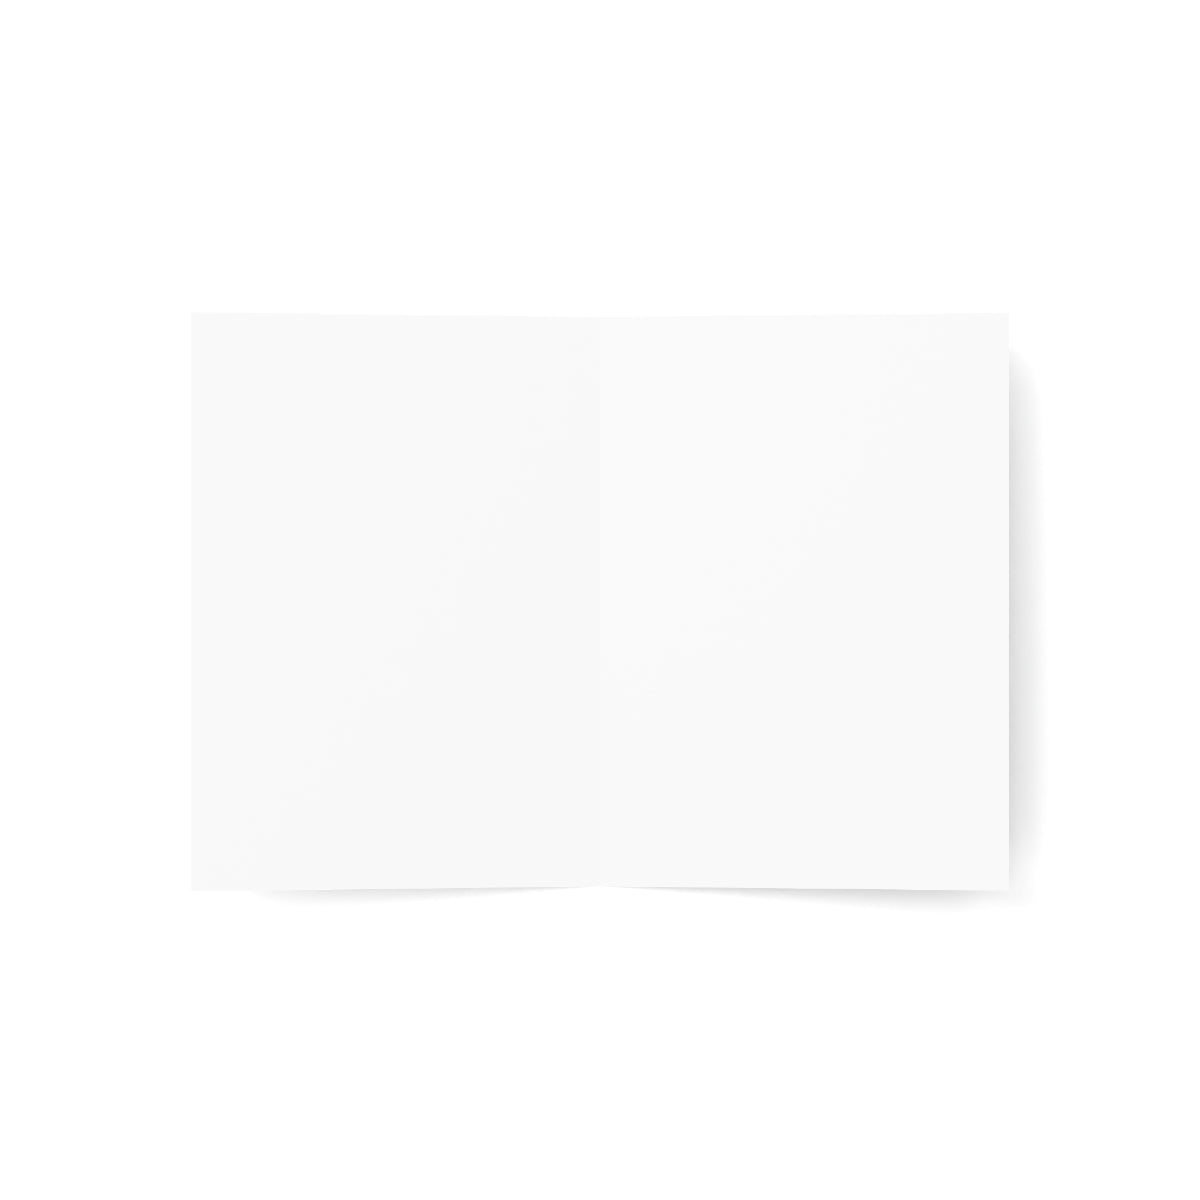 Cannon Beach Folded Matte Notecards + Envelopes (10pcs)